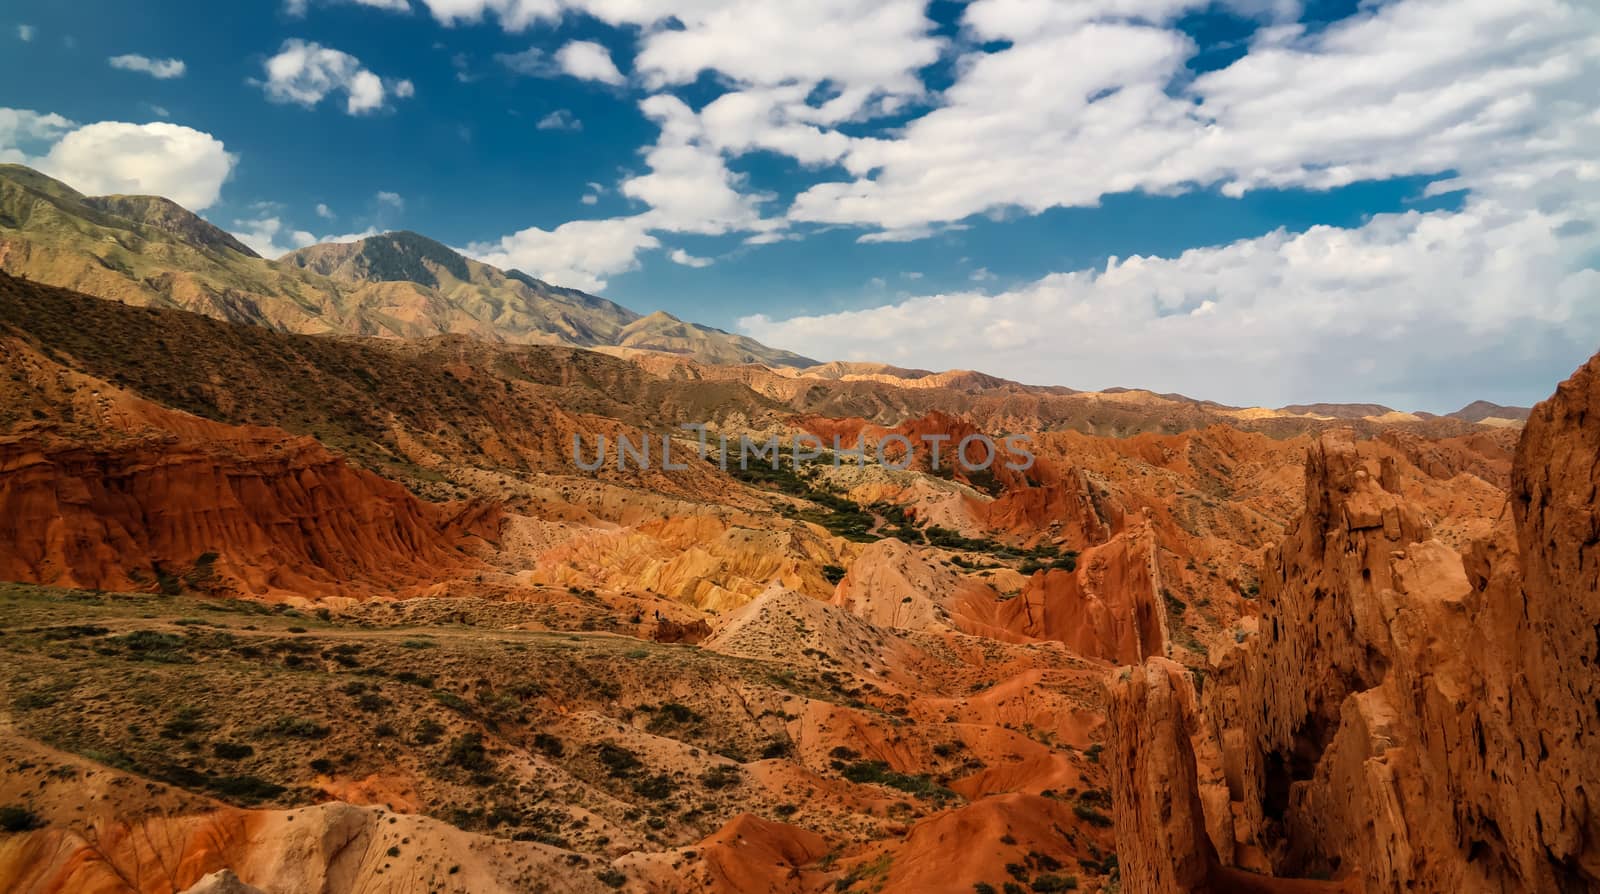 Panorama of Skazka aka Fairytale canyon, Issyk-Kul Kyrgyzstan by homocosmicos